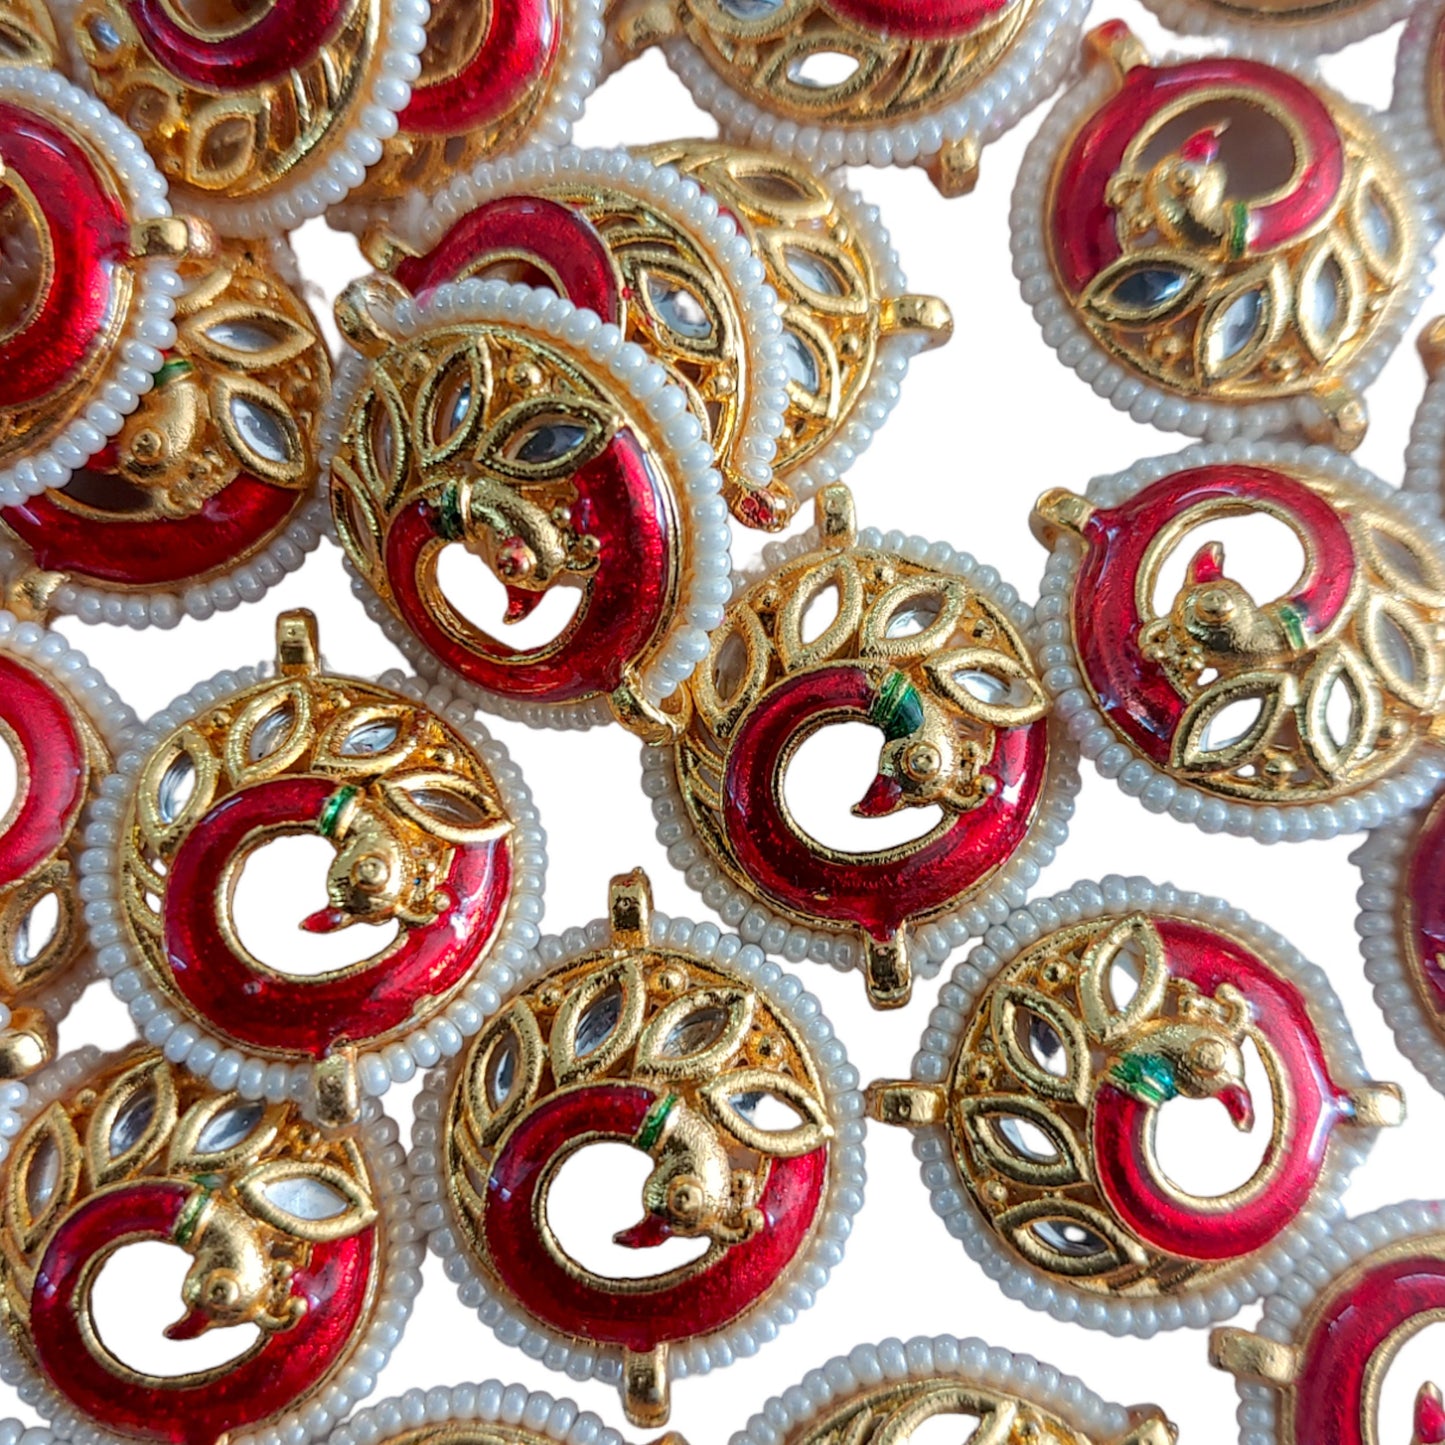 Indian Petals Round Shape Peacock Casting Metal Pendant Motif for Rakhi, Jewelry making, Craft or Decor.